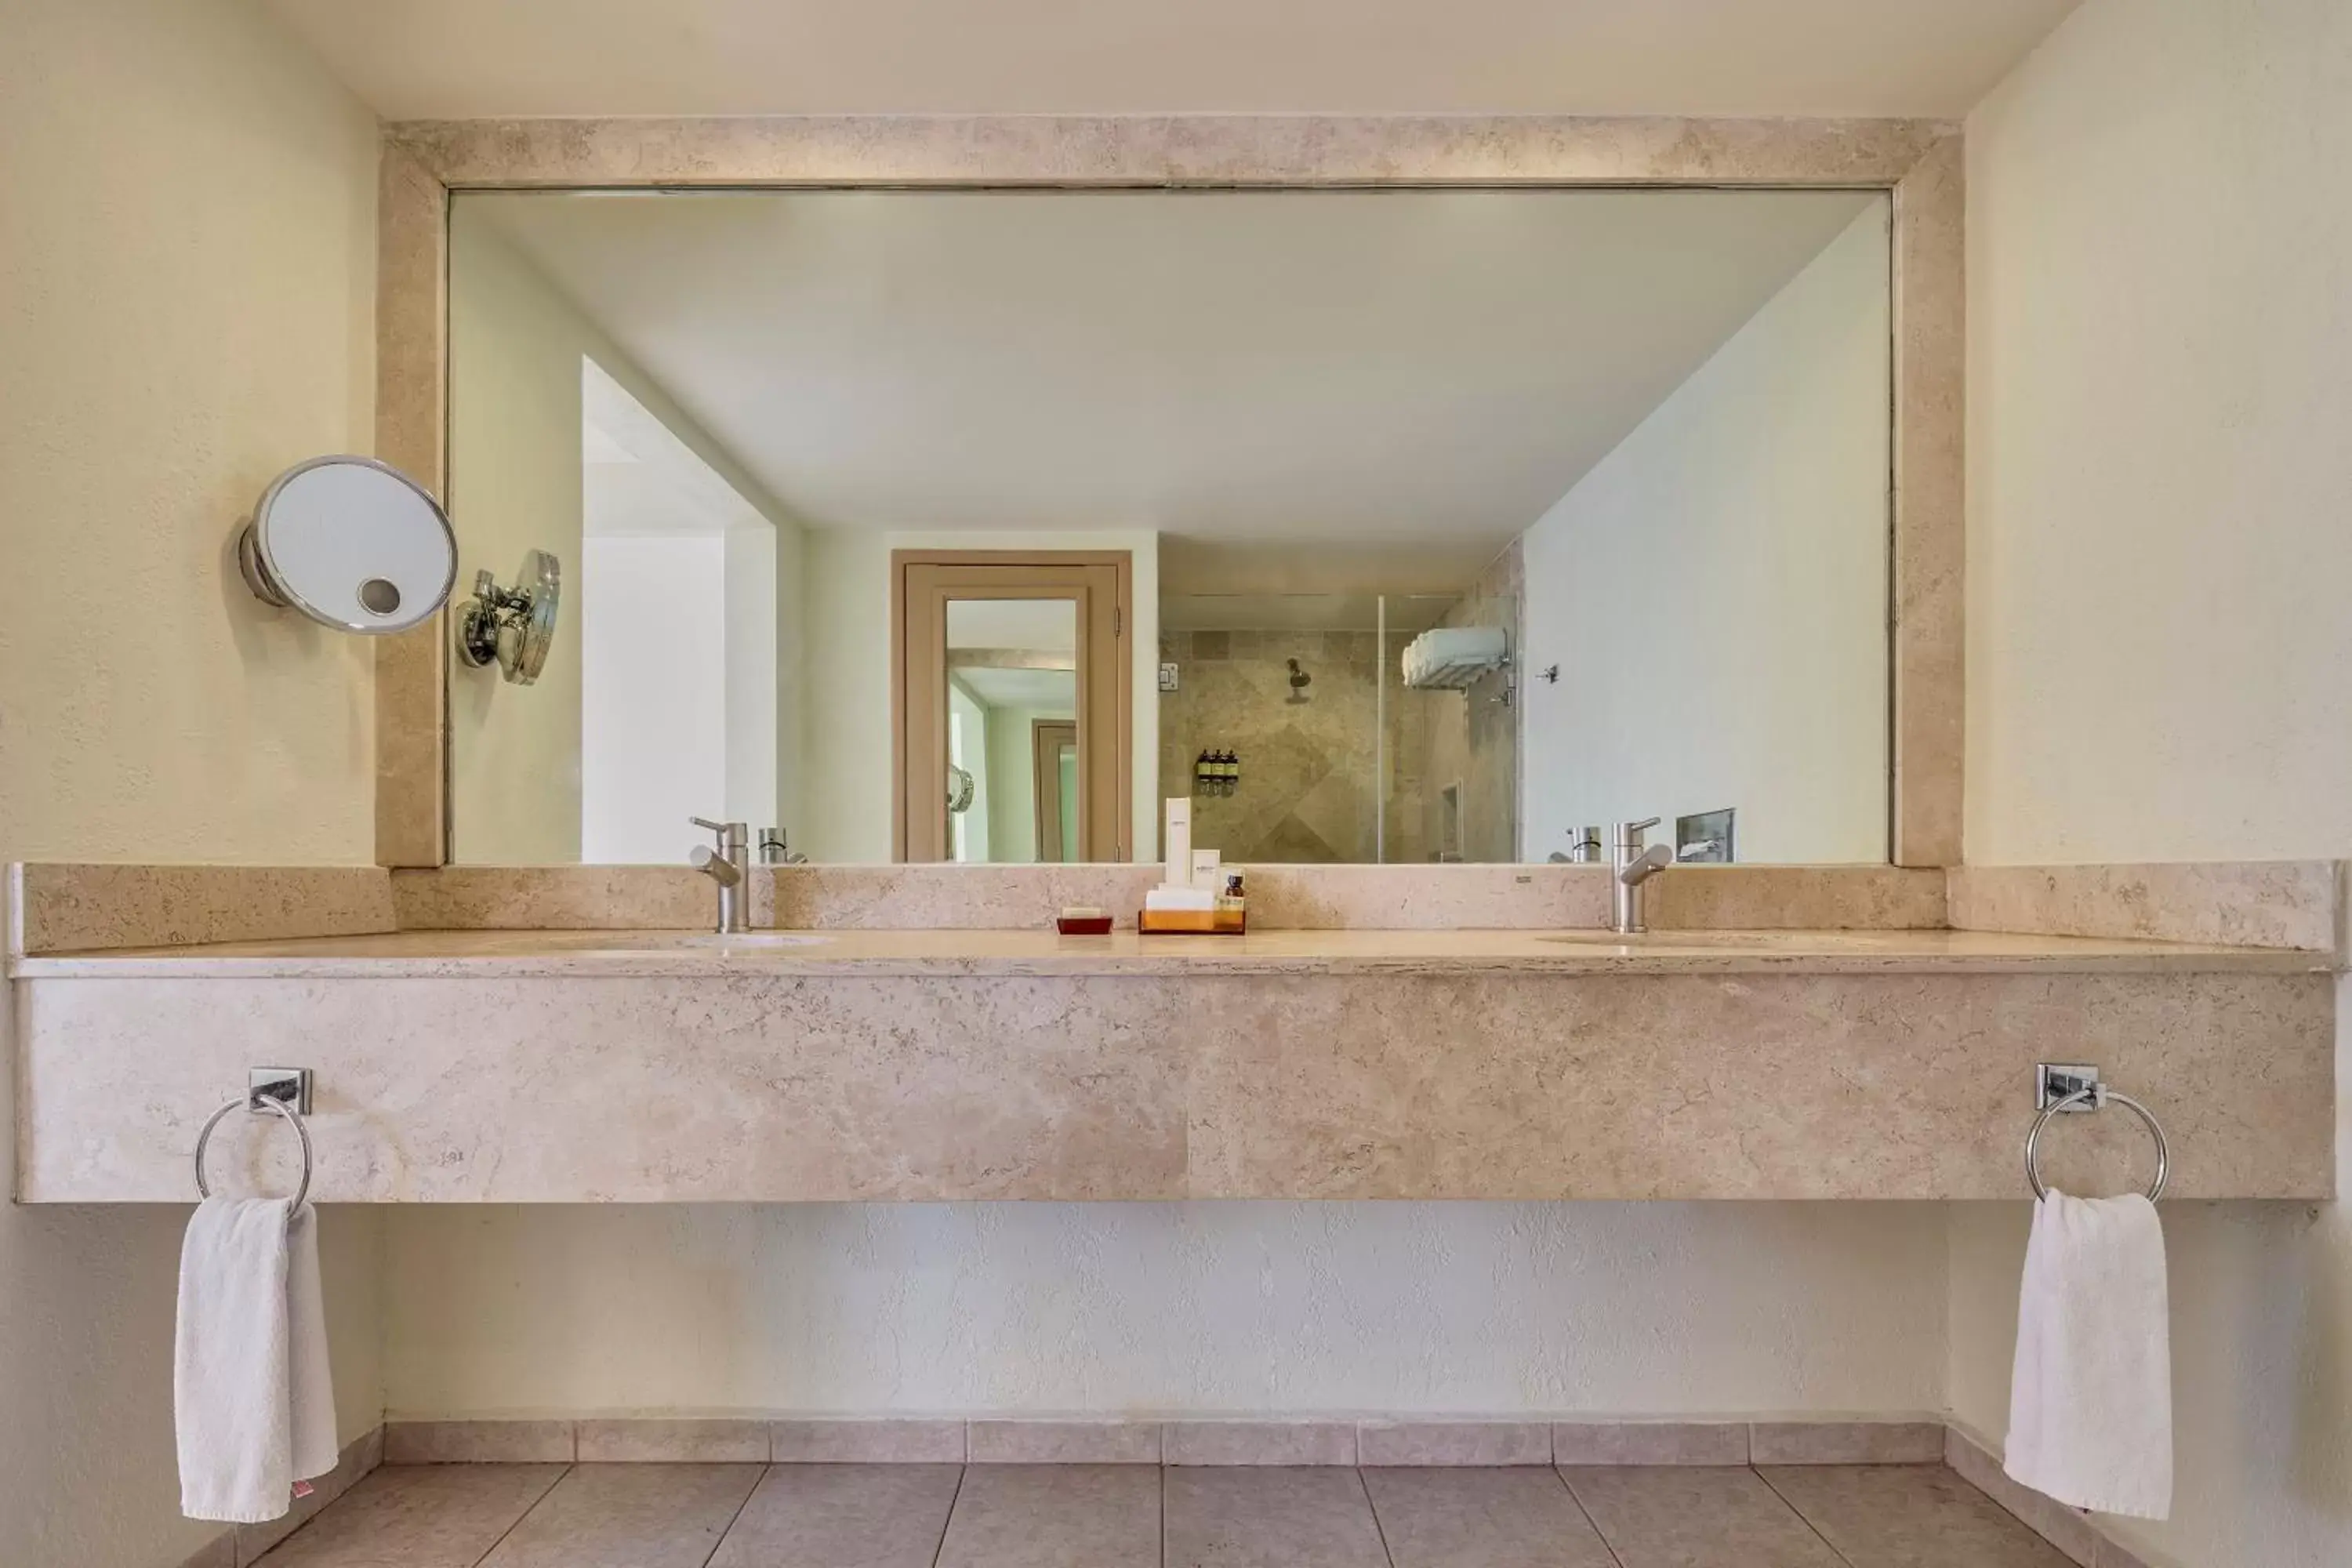 Photo of the whole room, Bathroom in Fiesta Americana Cancun Villas